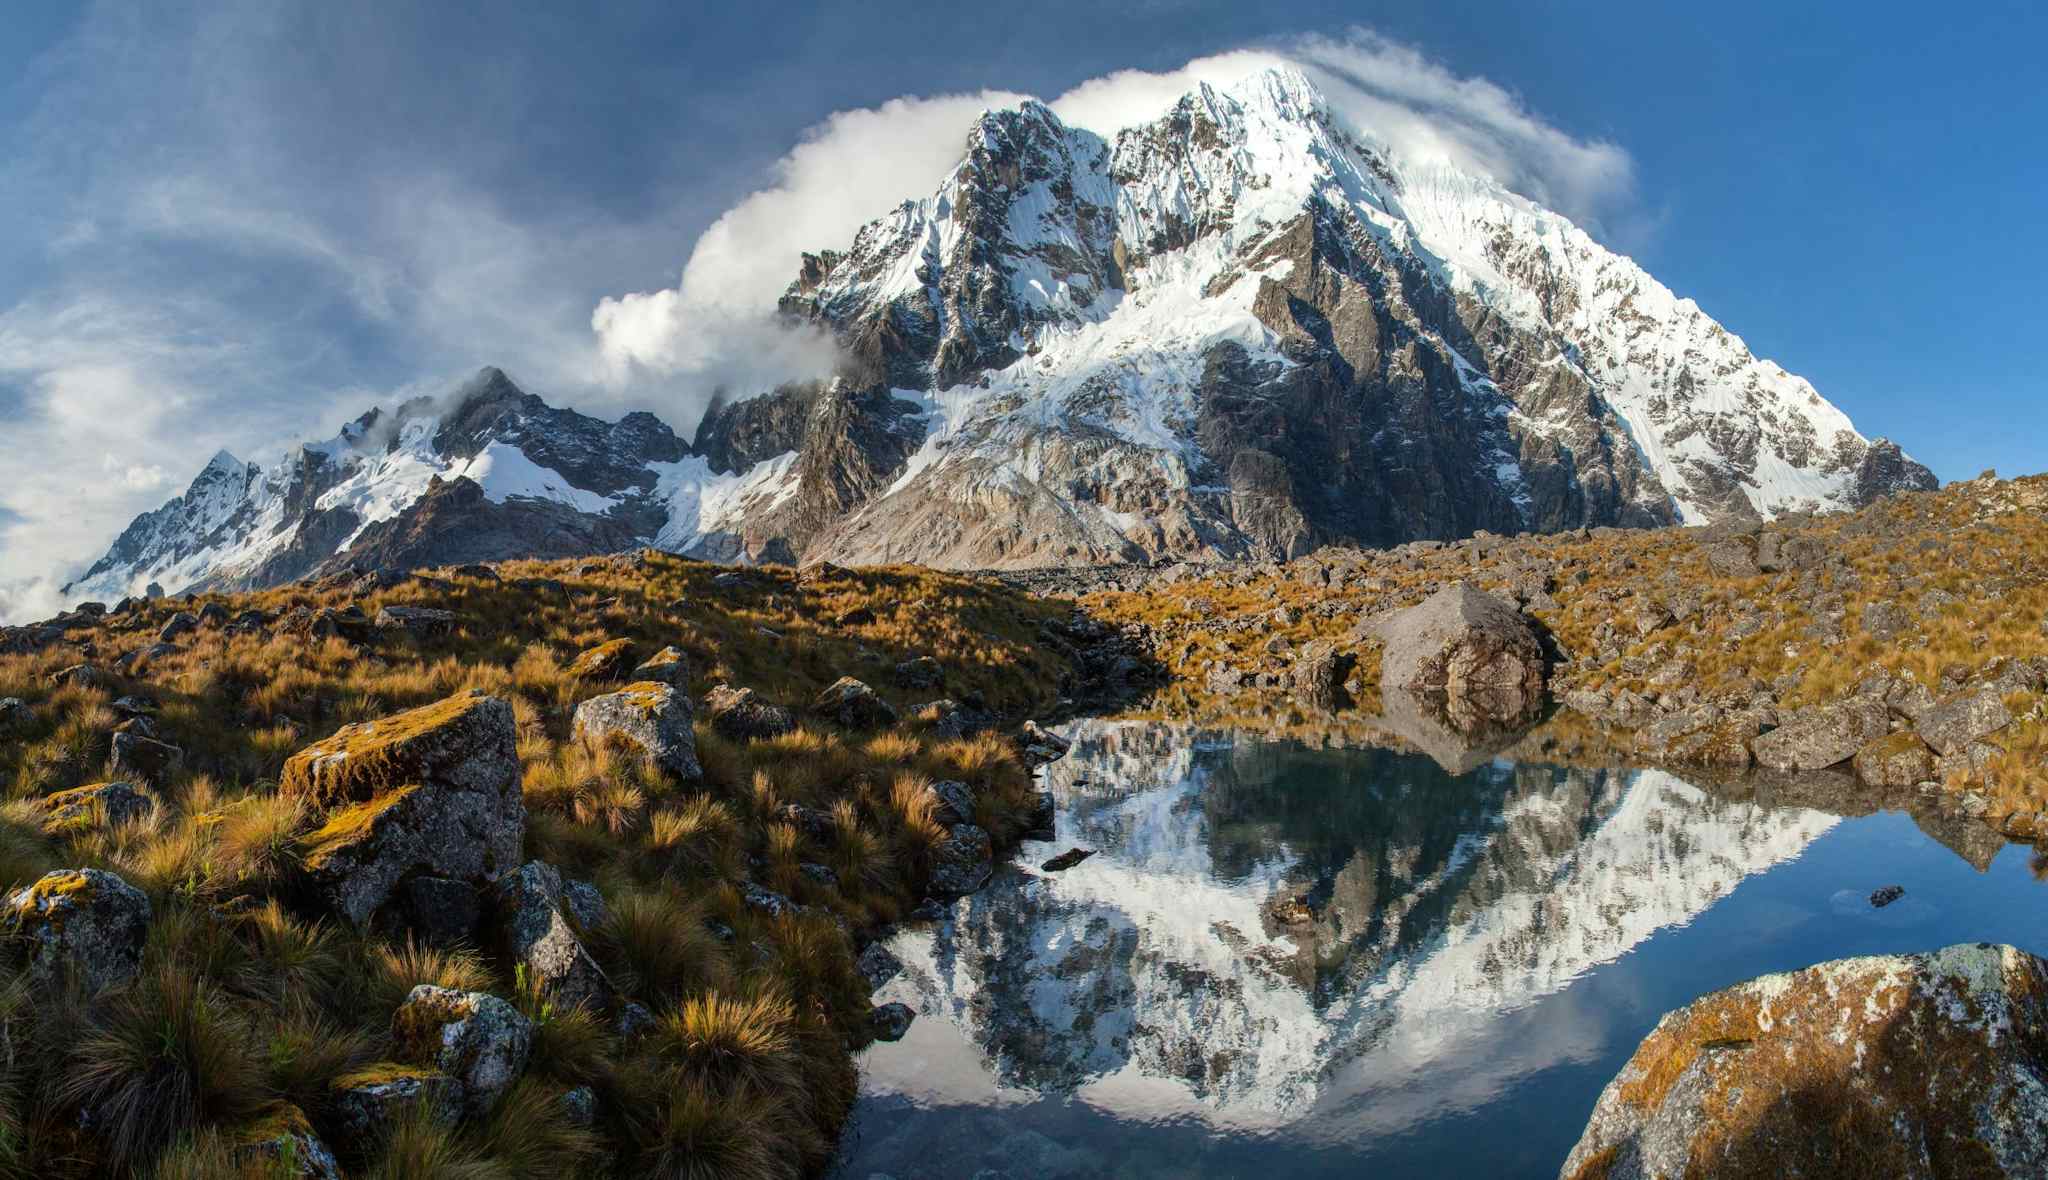 Reflection of Mt Salkantay in a lake on the Salkantay Trek in Peru.